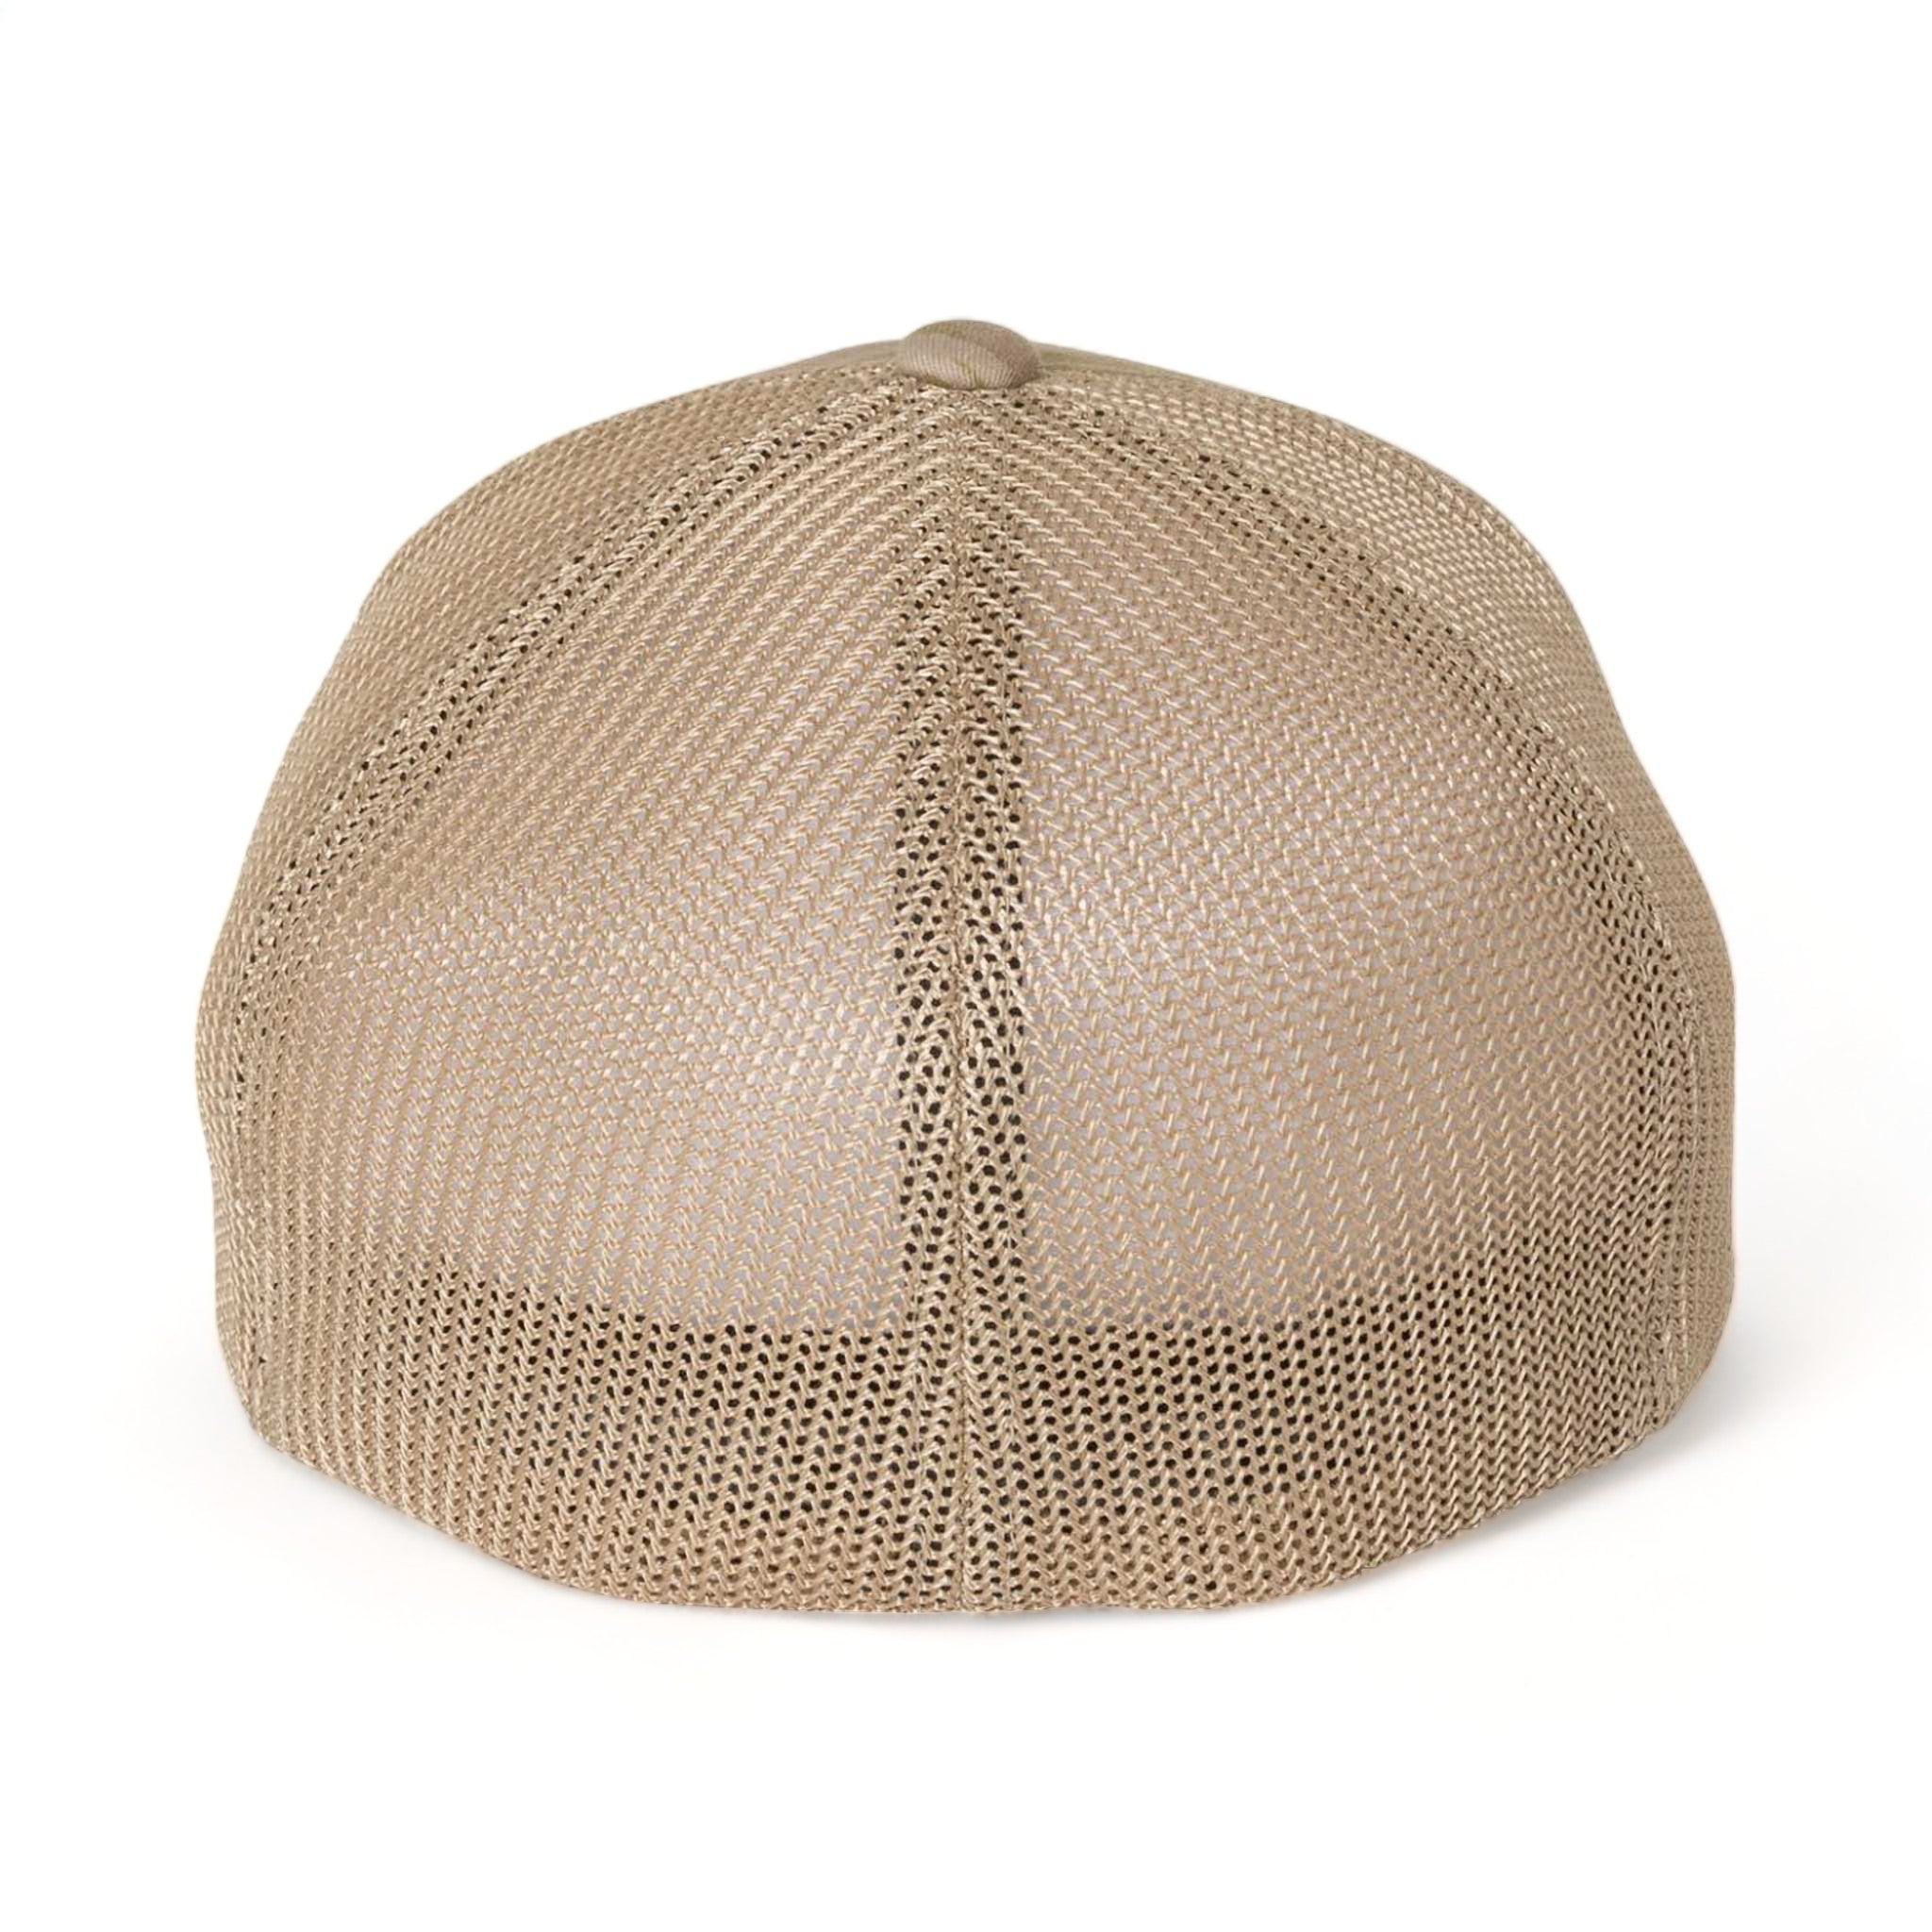 Back view of Flexfit 6511 custom hat in multicam arid and tan